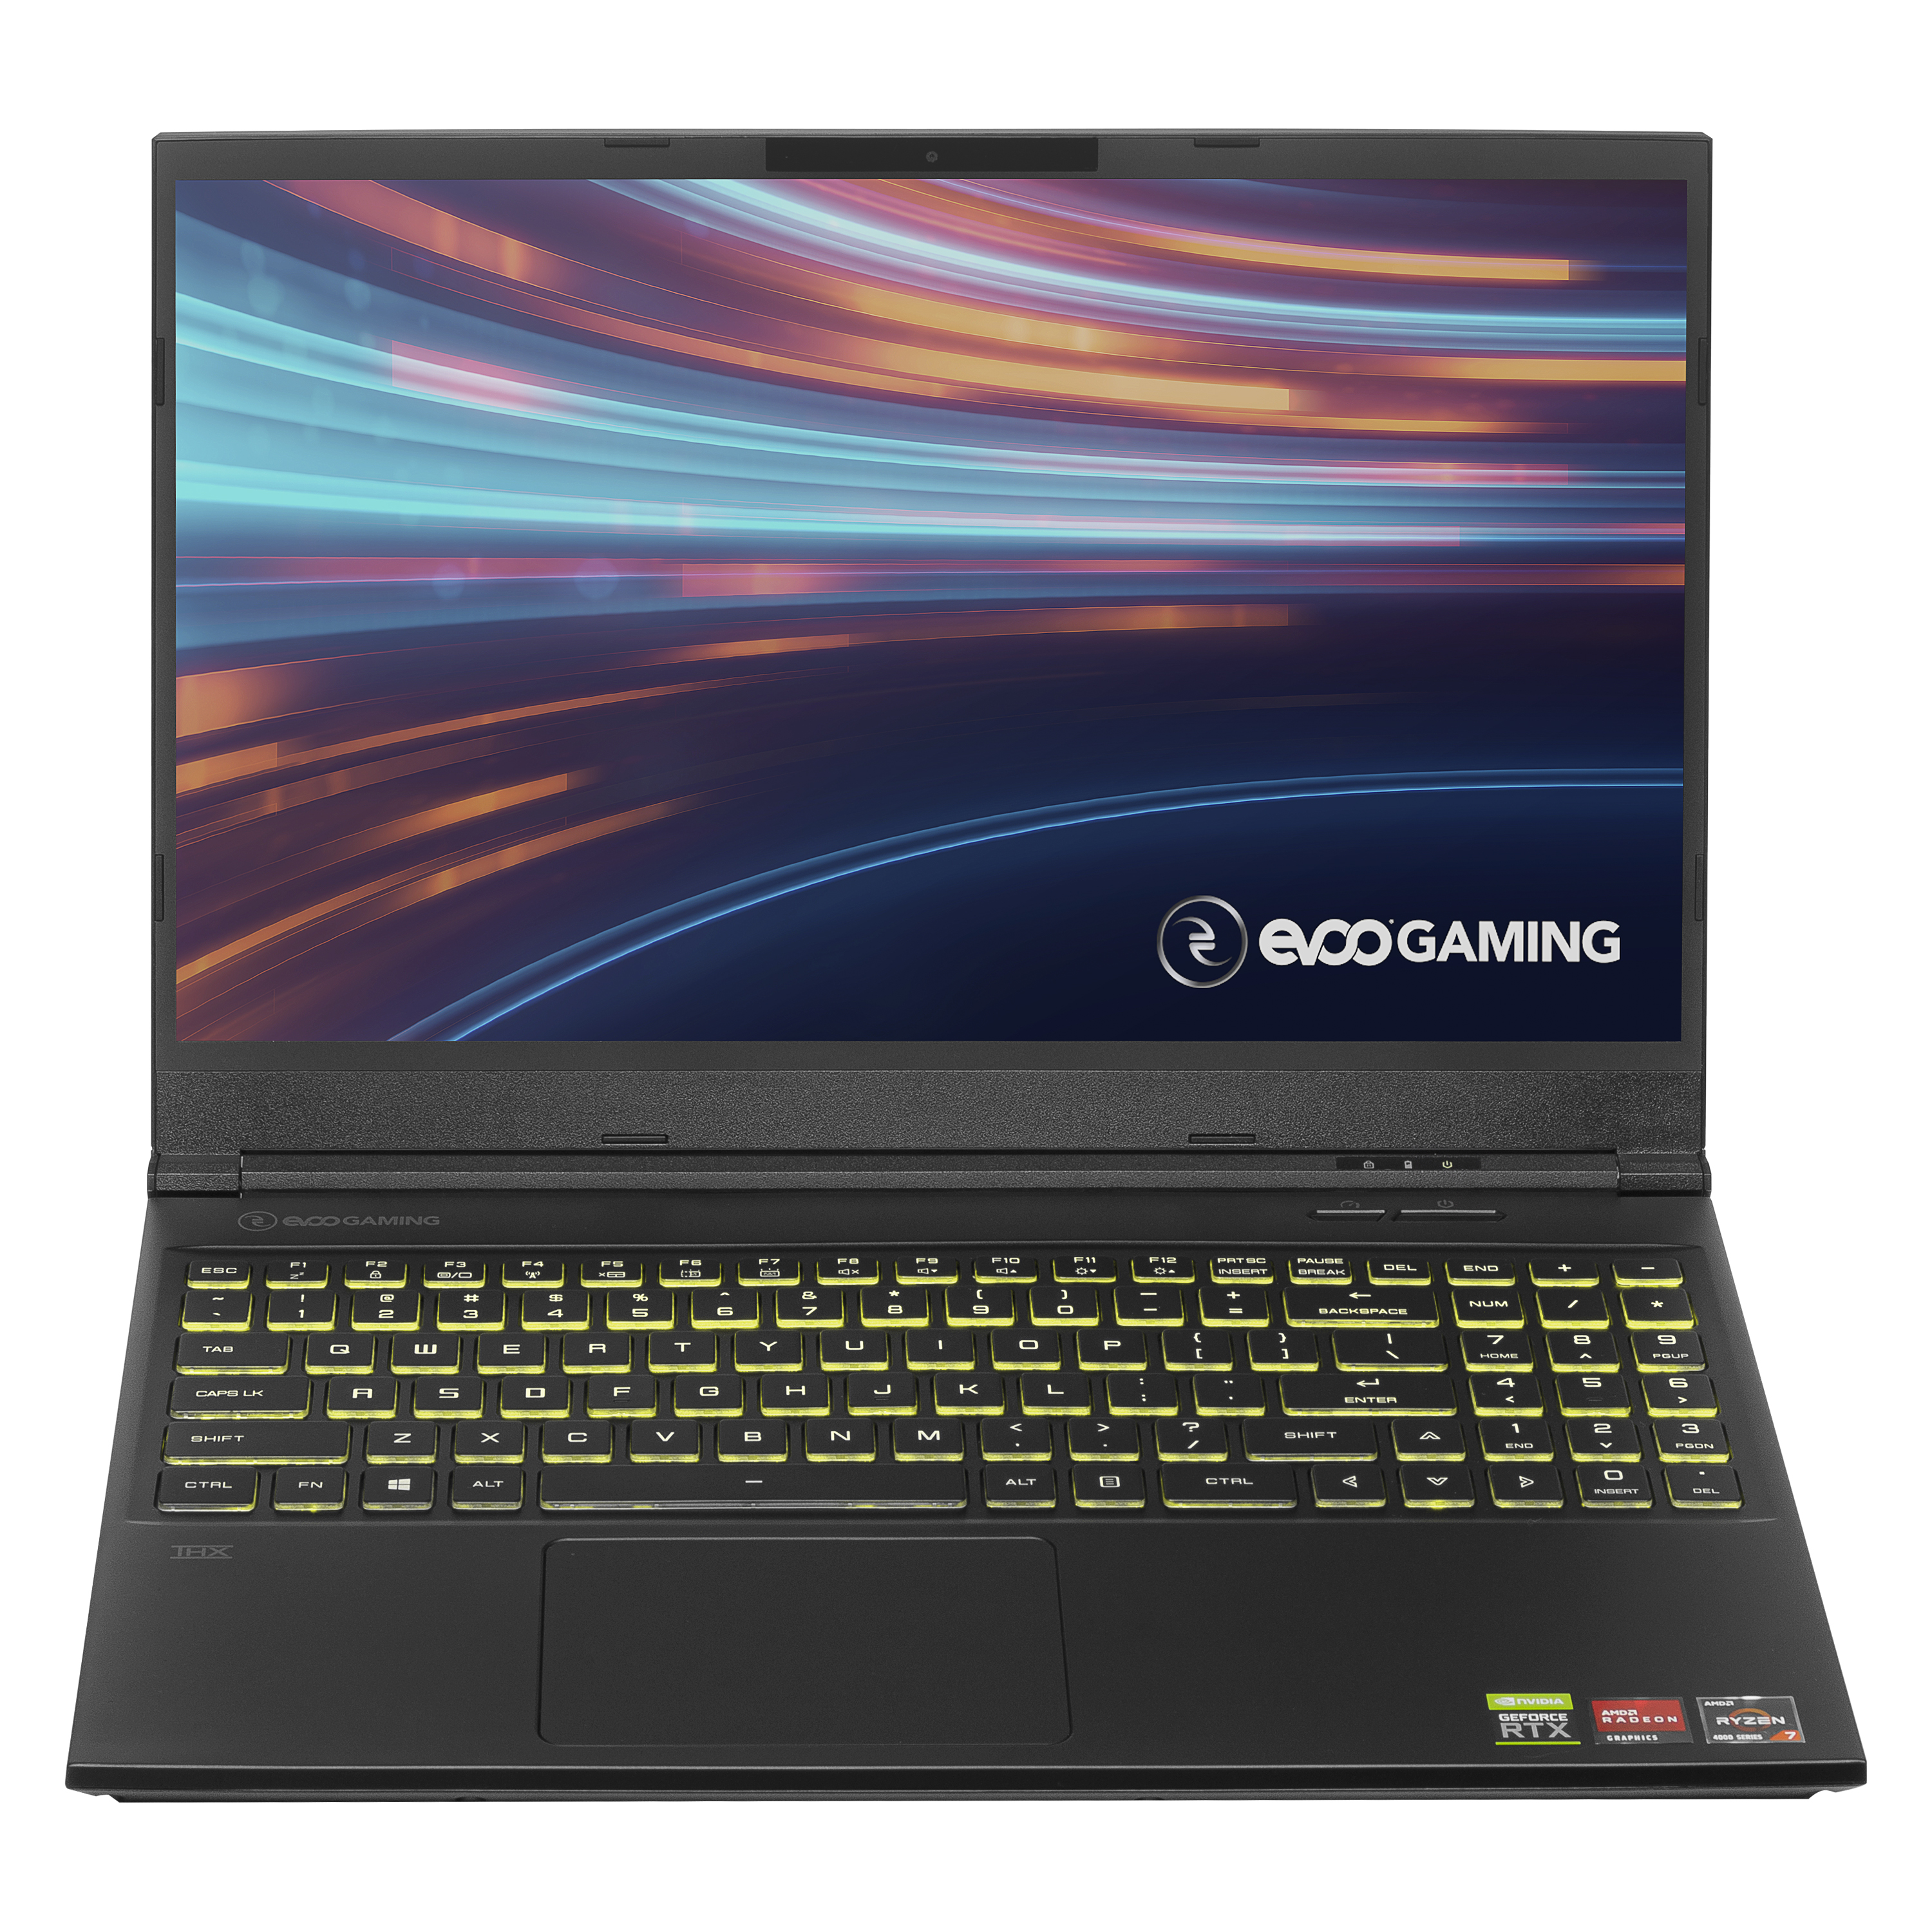 EVOO Gaming 15.6” Laptop, FHD, 120Hz, AMD Ryzen 7 4800H Processor, NVIDIA GeForce RTX 2060, THX Spatial Audio, 512GB SSD, 16GB RAM, RGB Backlit Keyboard, HD Camera, Windows 10 Home, Black - image 1 of 4